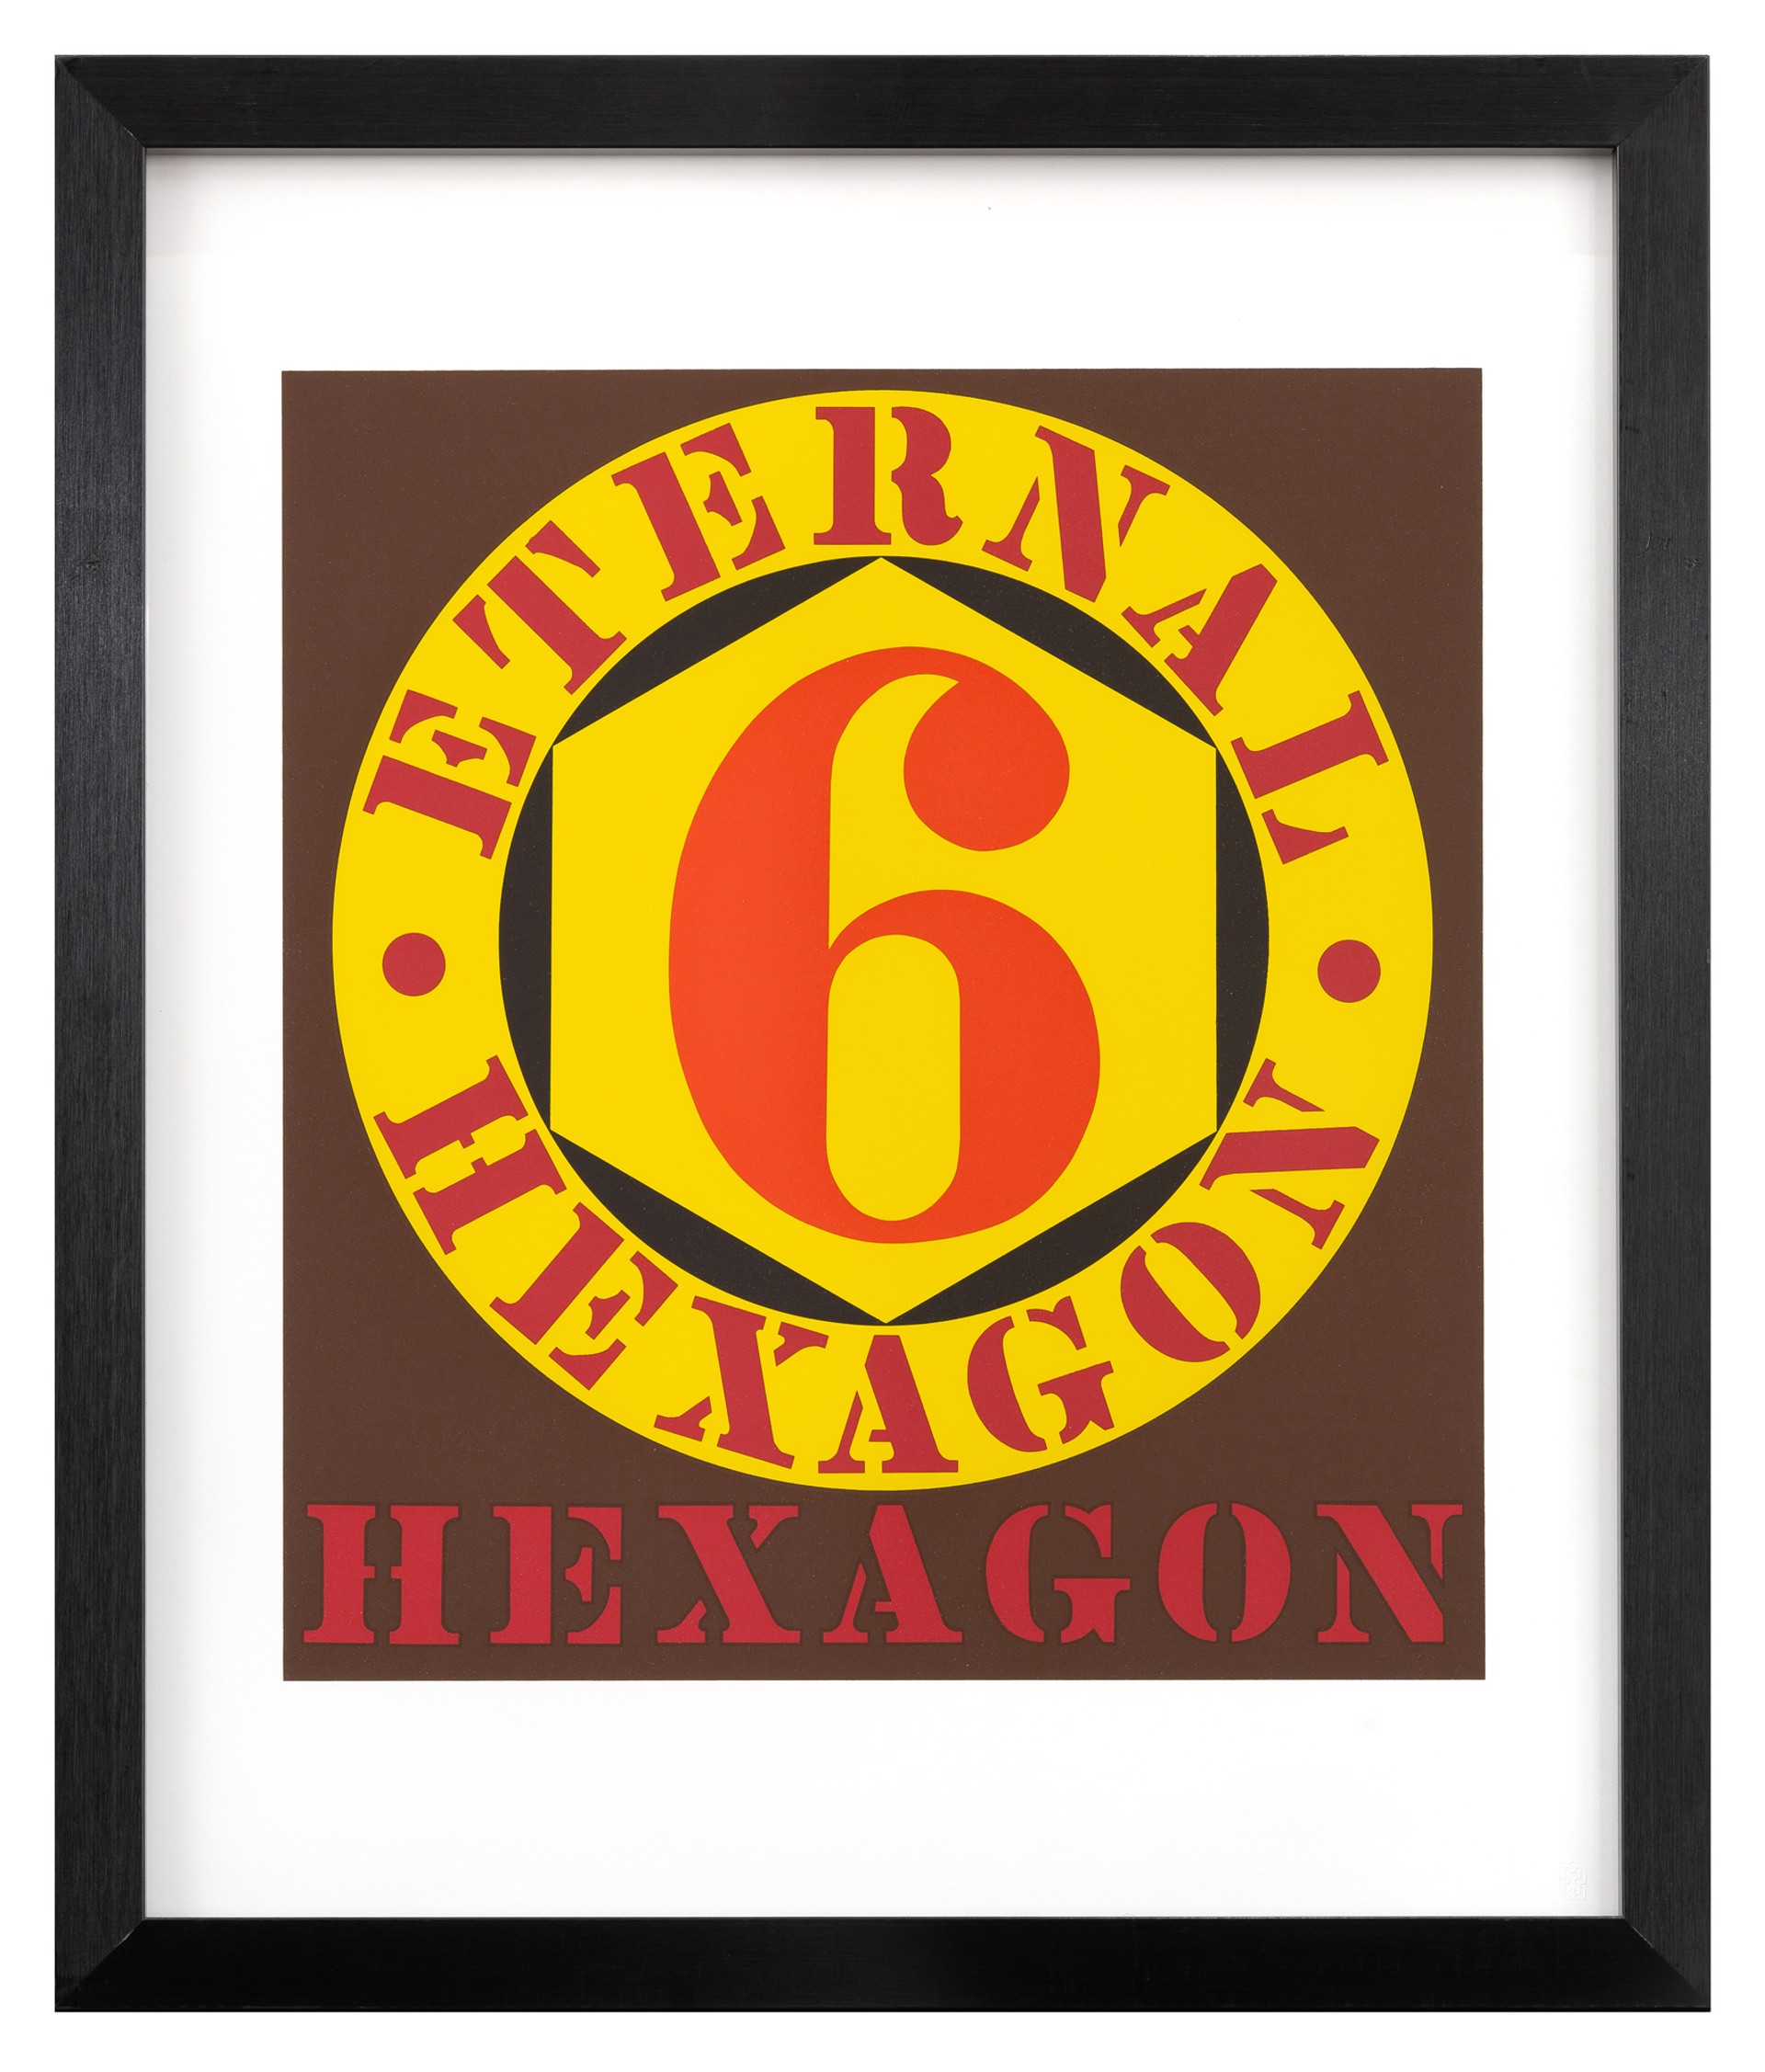 Eternal Hexagon from X + X (Ten Works by Ten Painters) by Robert Indiana